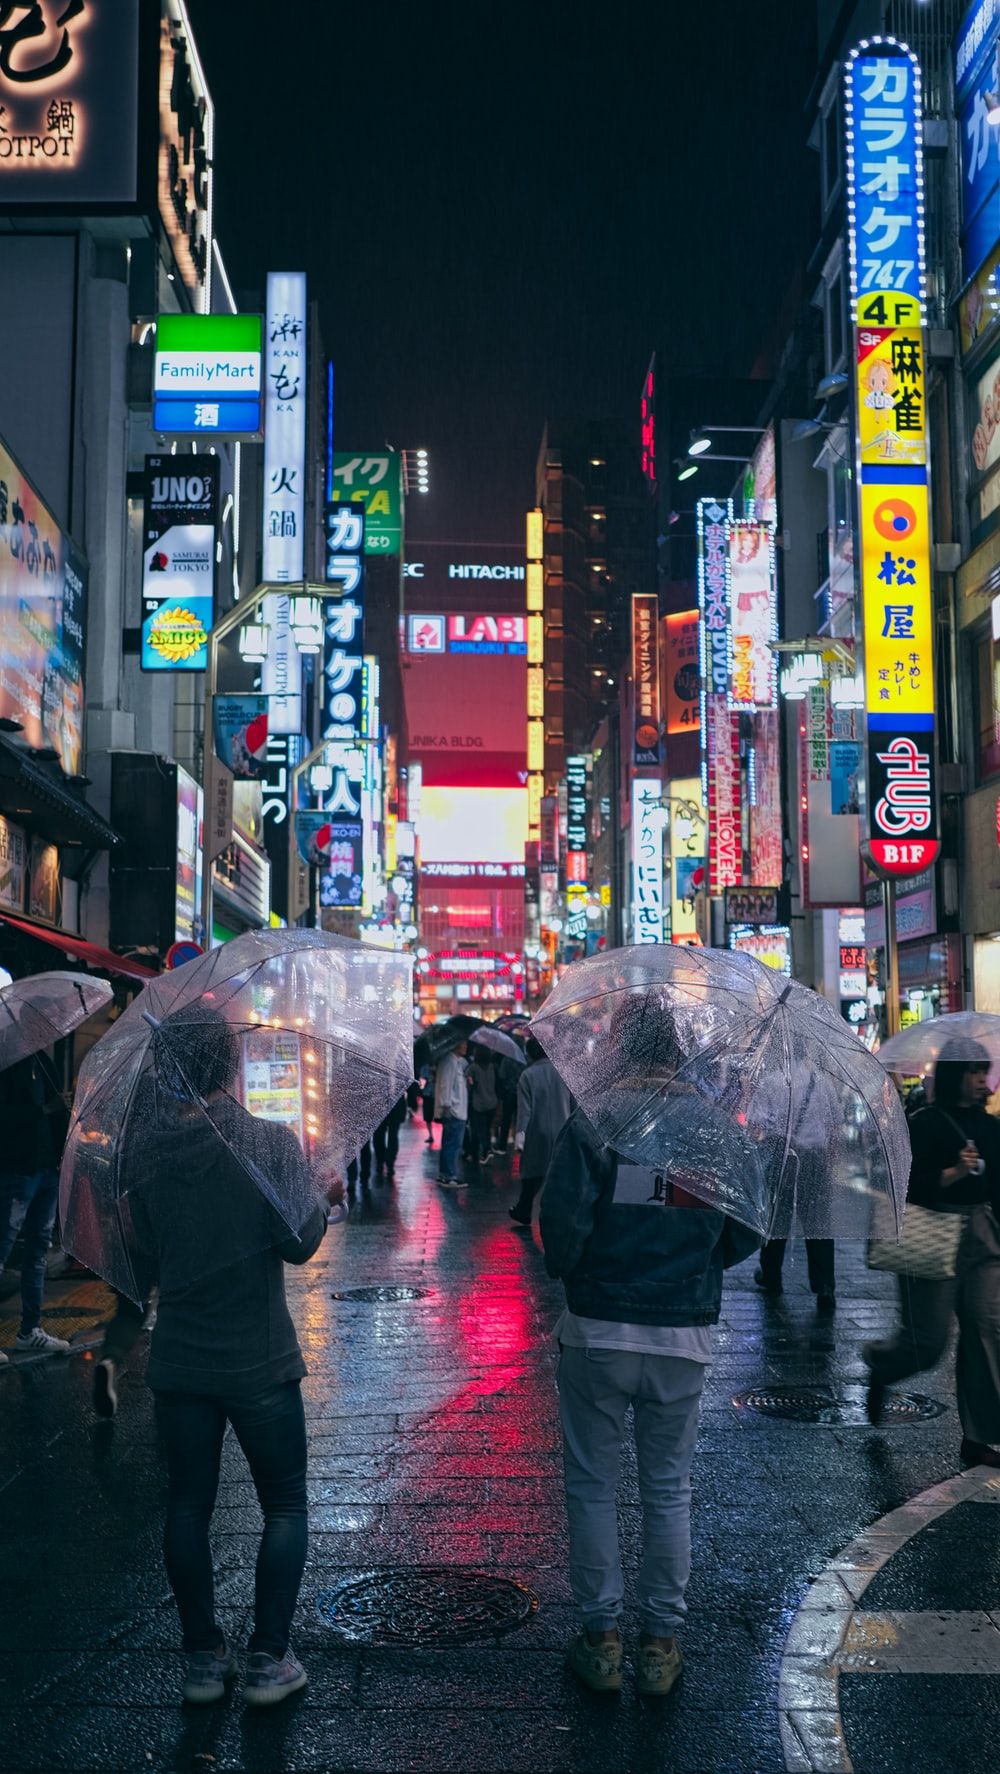 Tokyo Rain Picture. Download Free Image